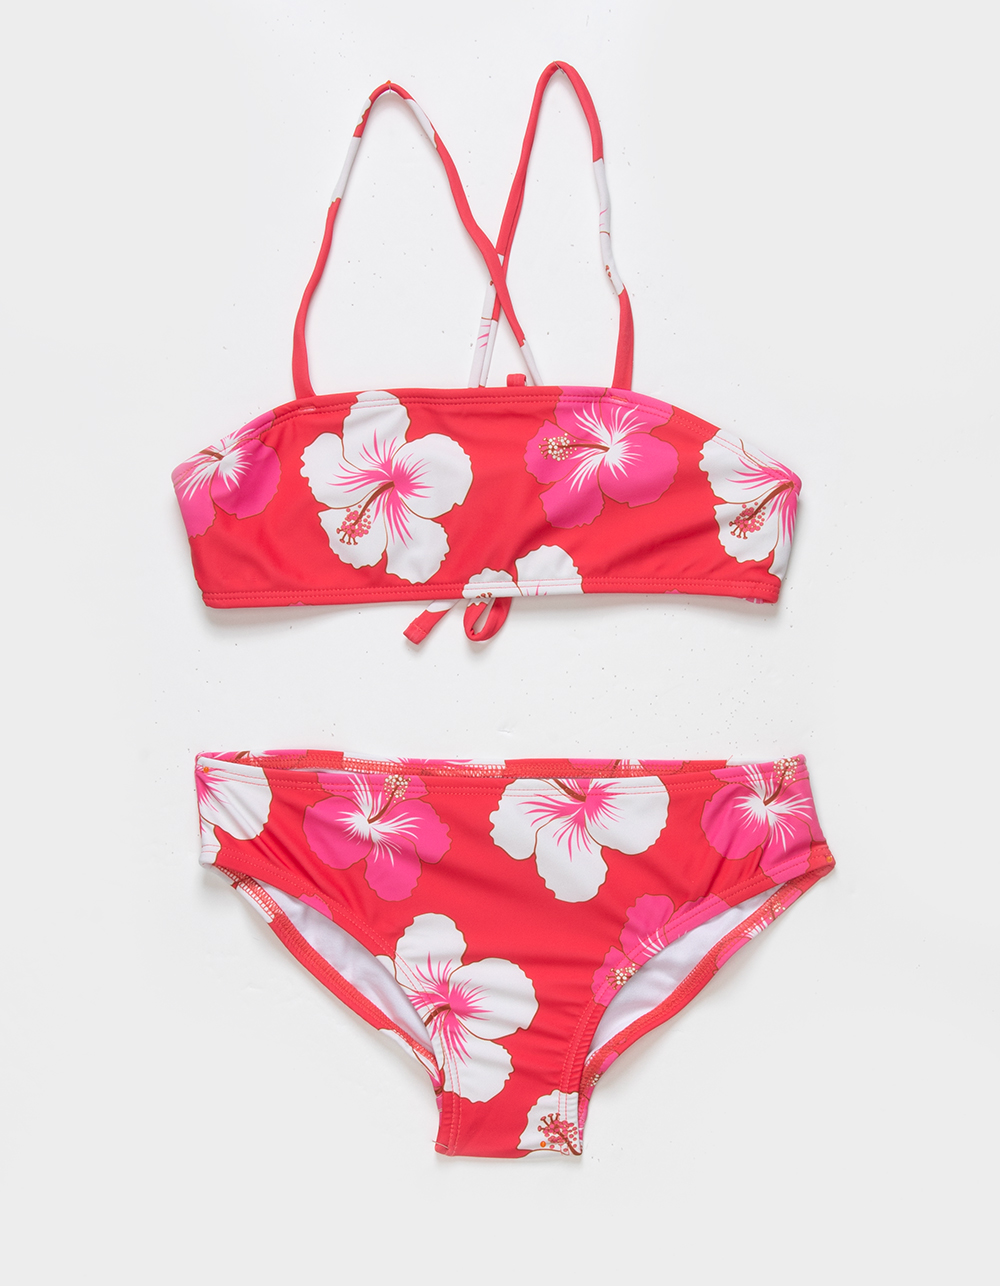 CORAL & REEF Lucy Girls Bralette Bikini Set